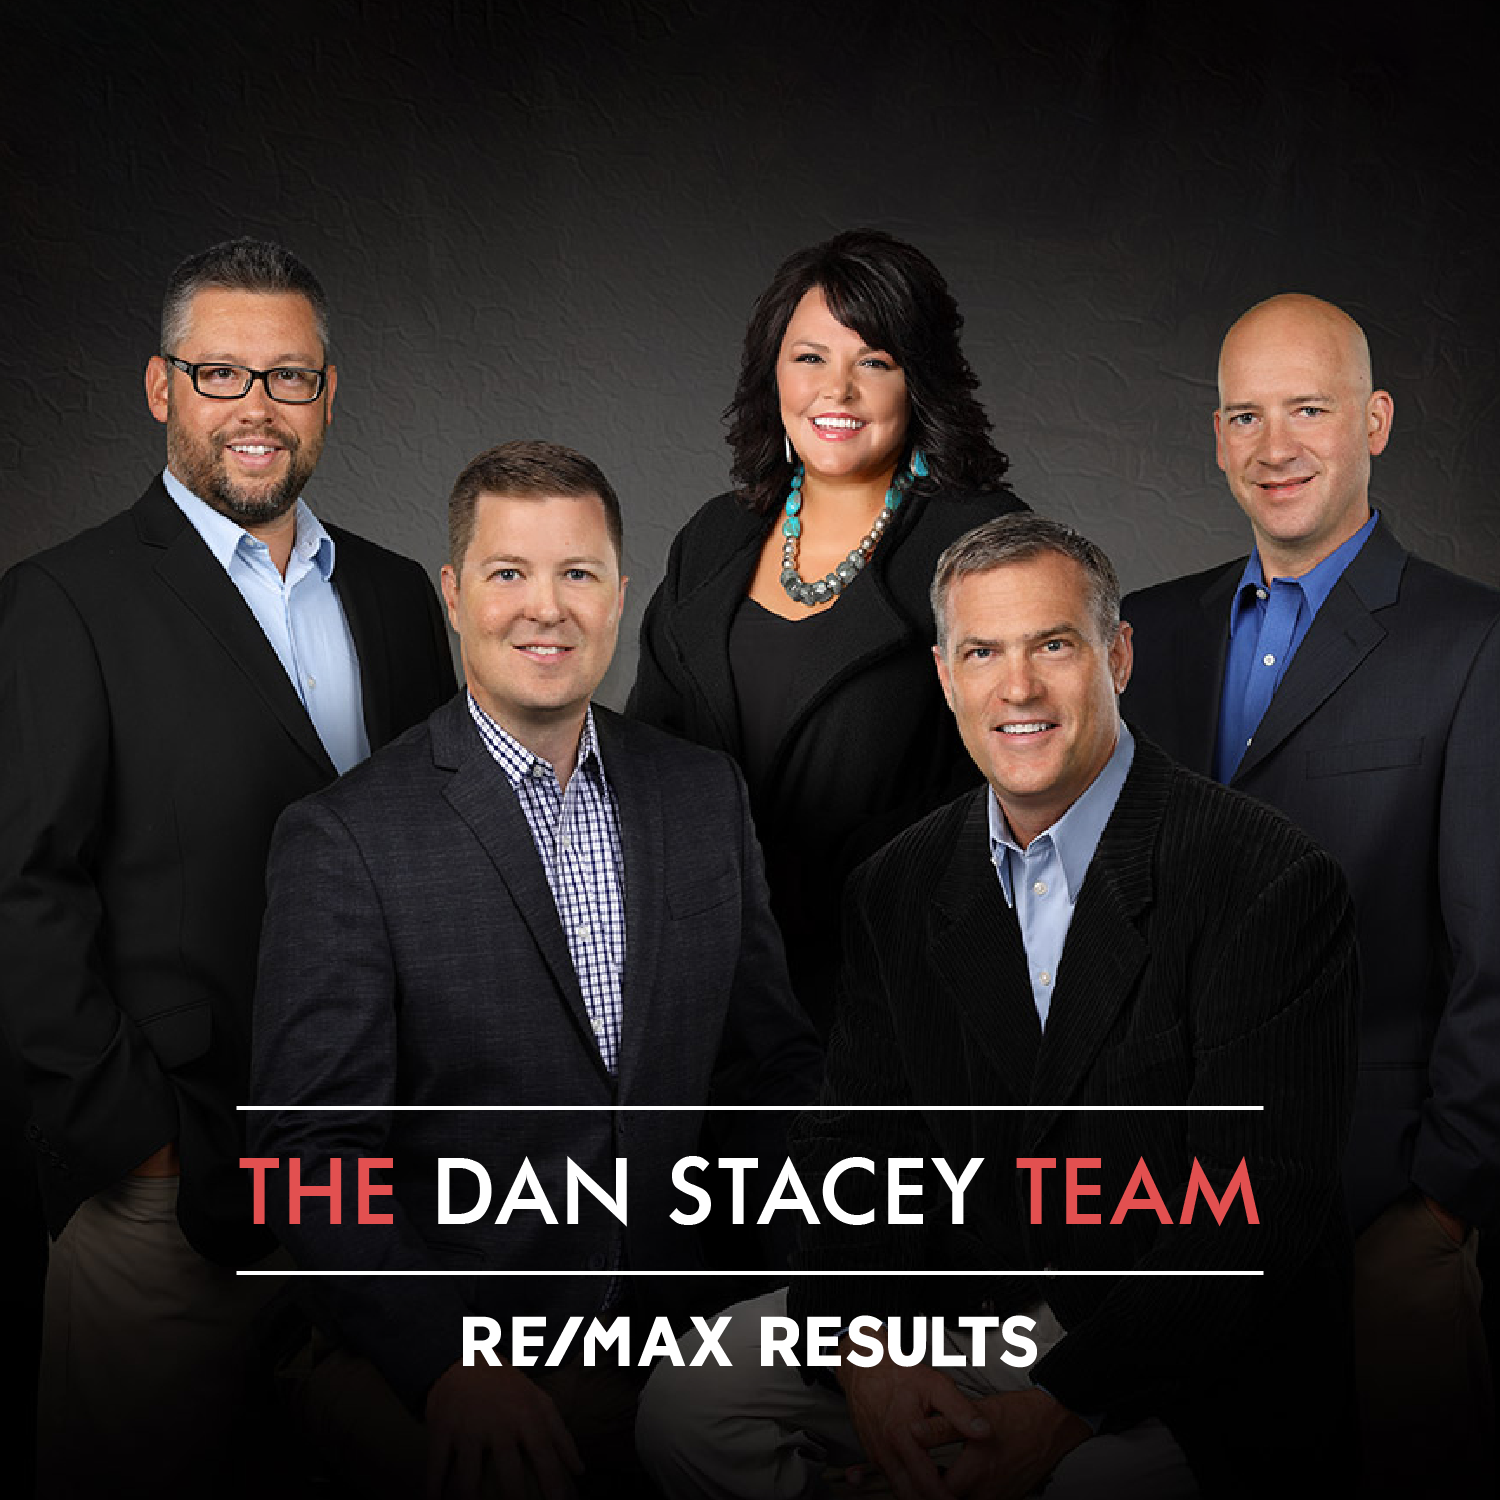 The Dan Stacey Team